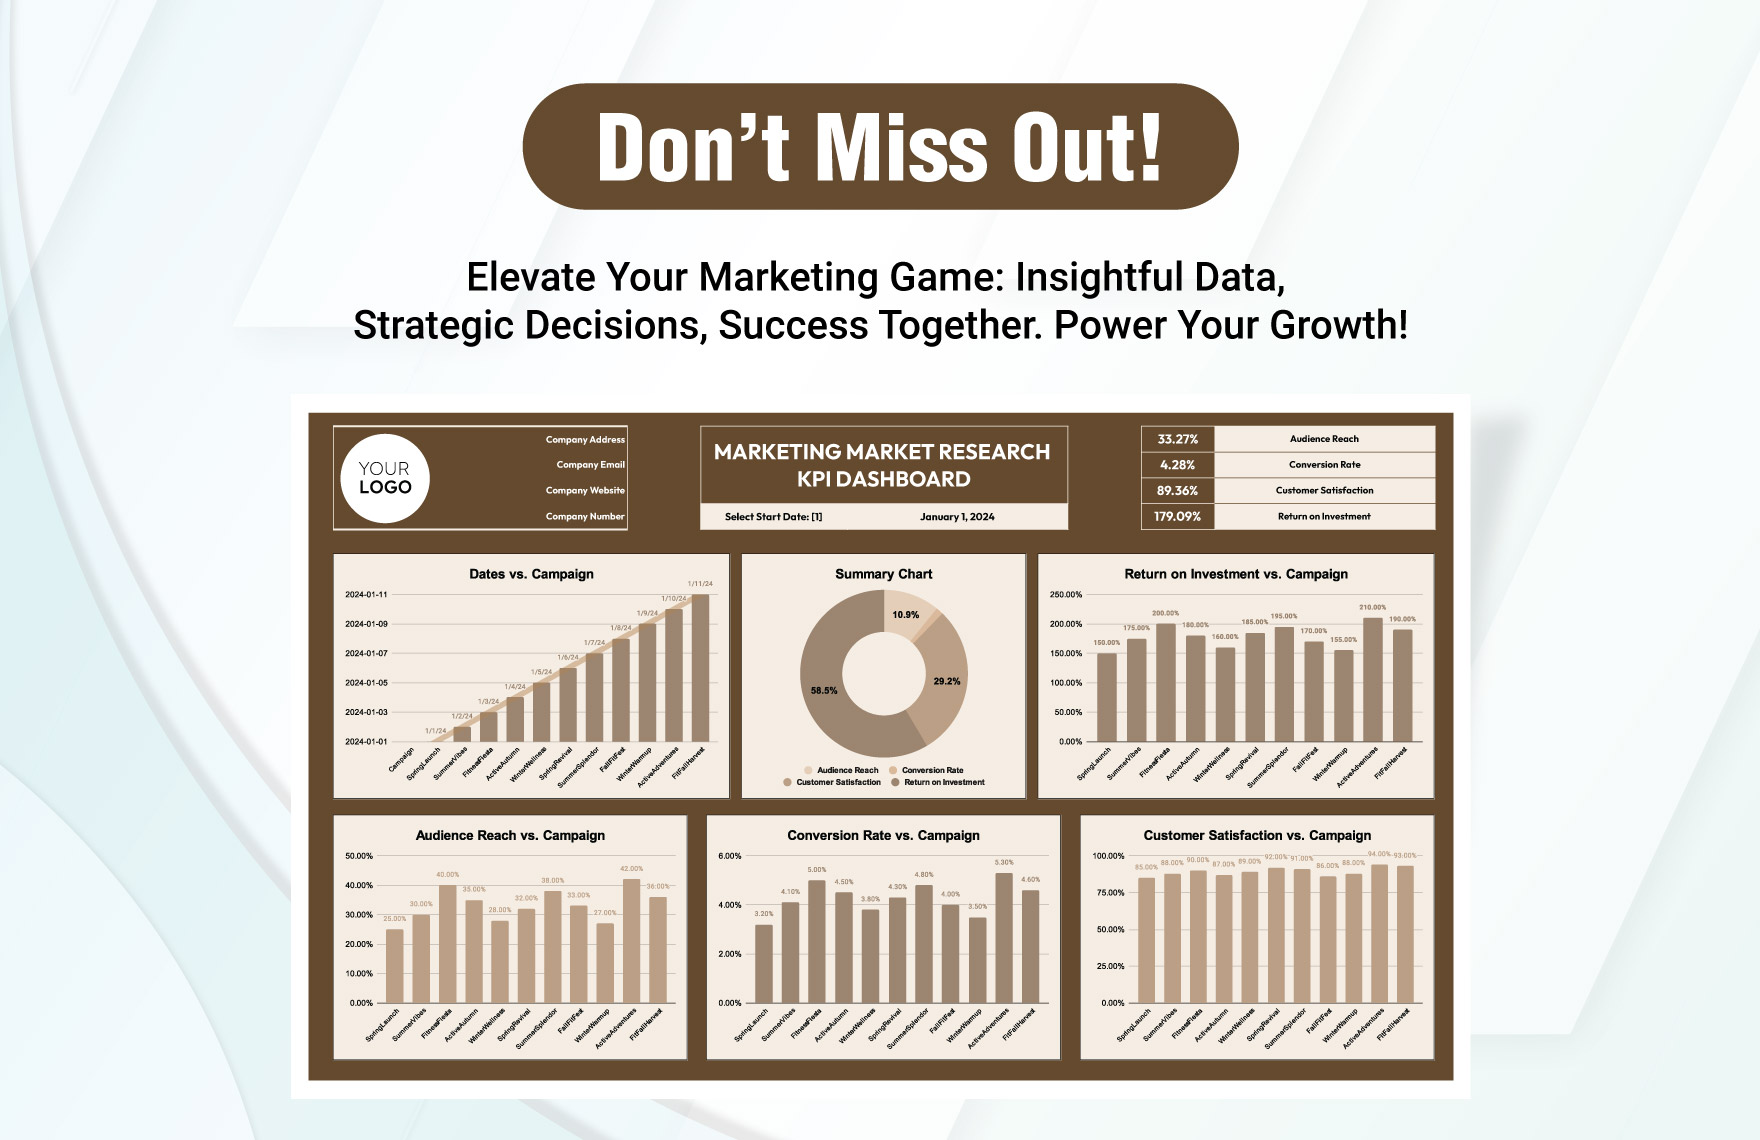 Marketing Market Research KPI Dashboard Template